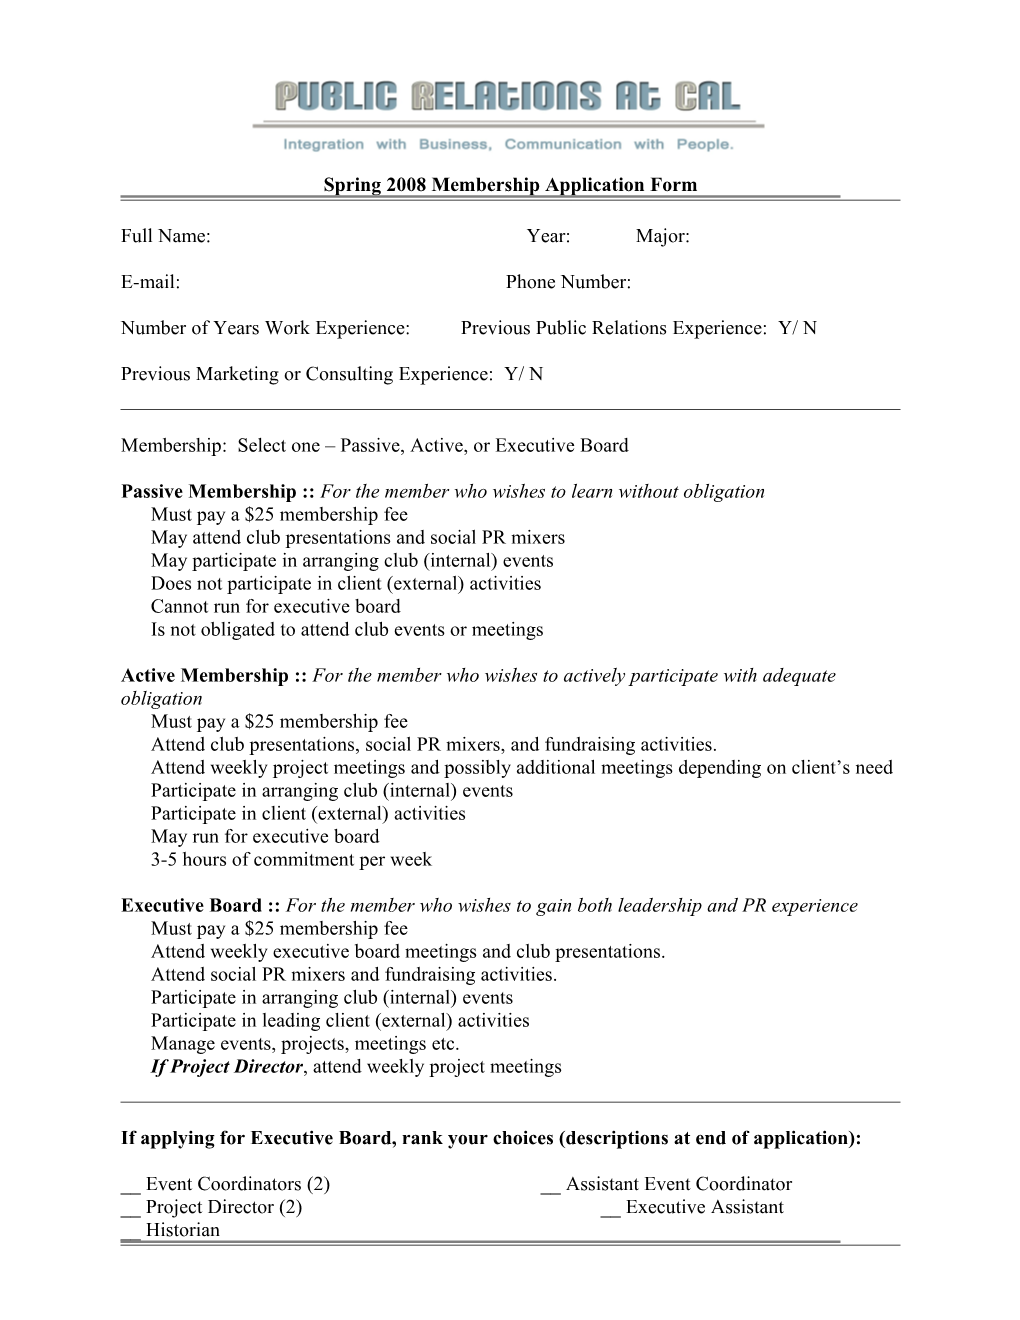 Spring 2008 Membership Application Form